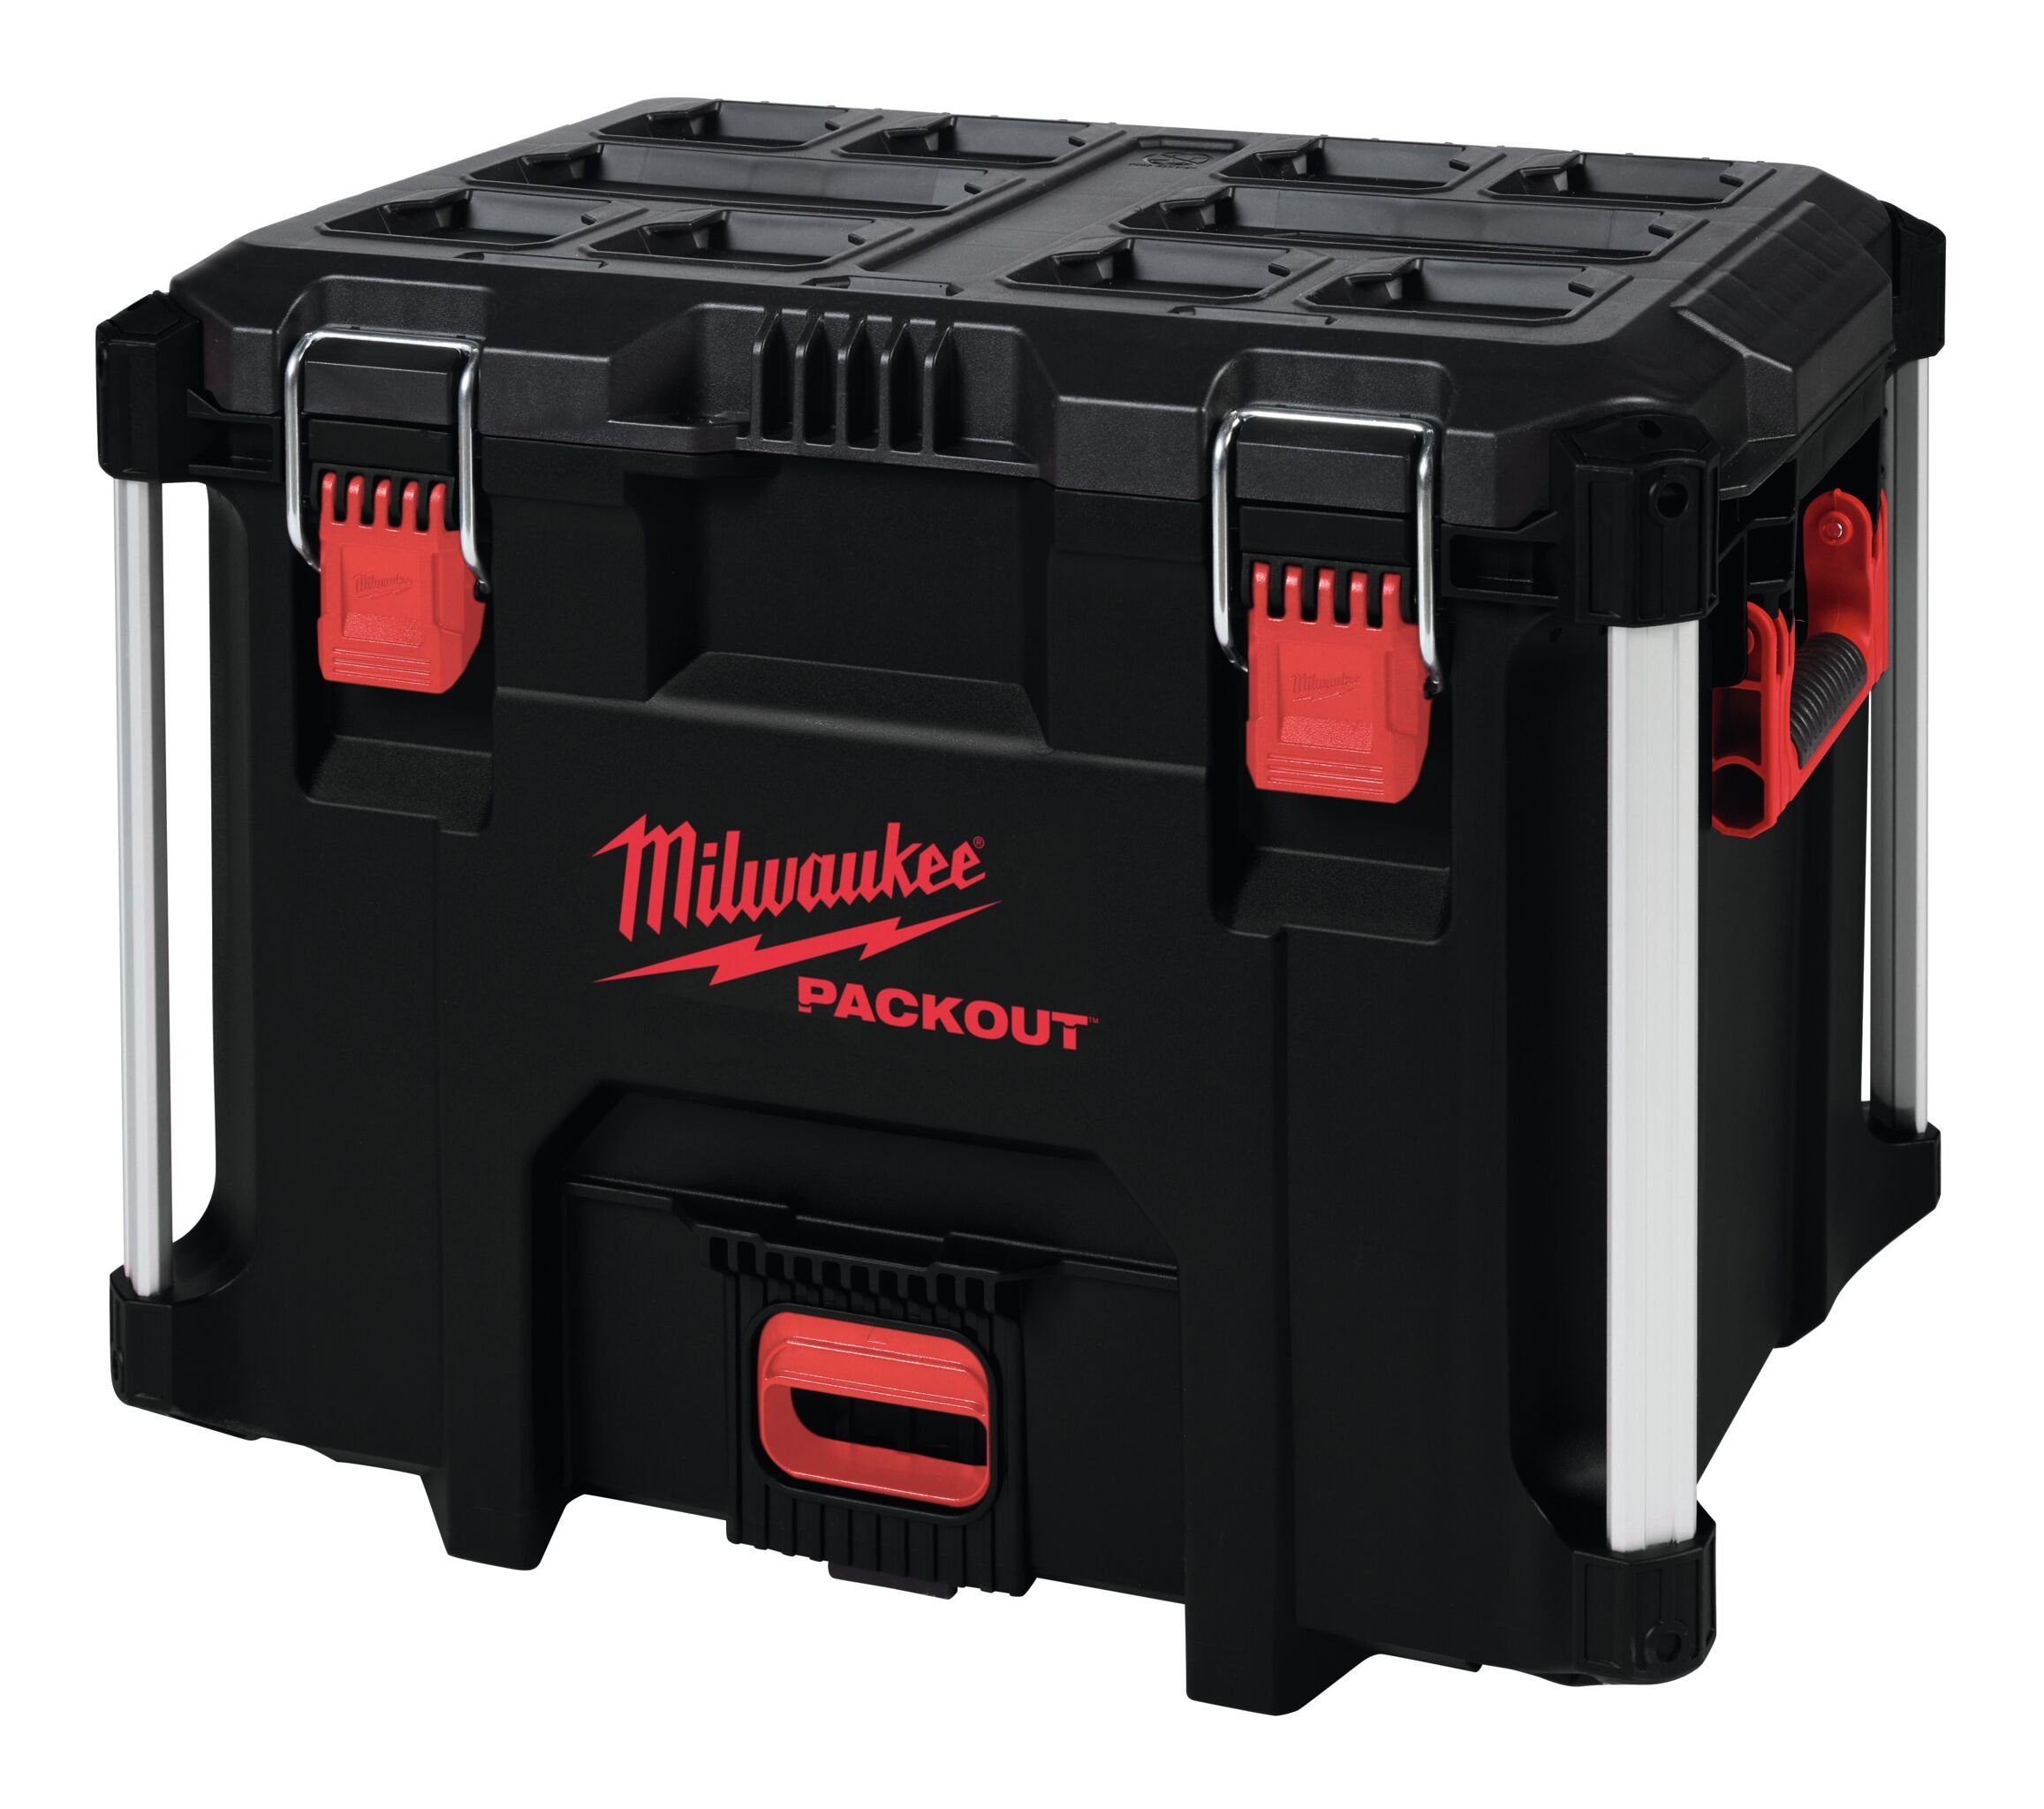 Milwaukee Werkzeugkoffer, Packout Koffer XL